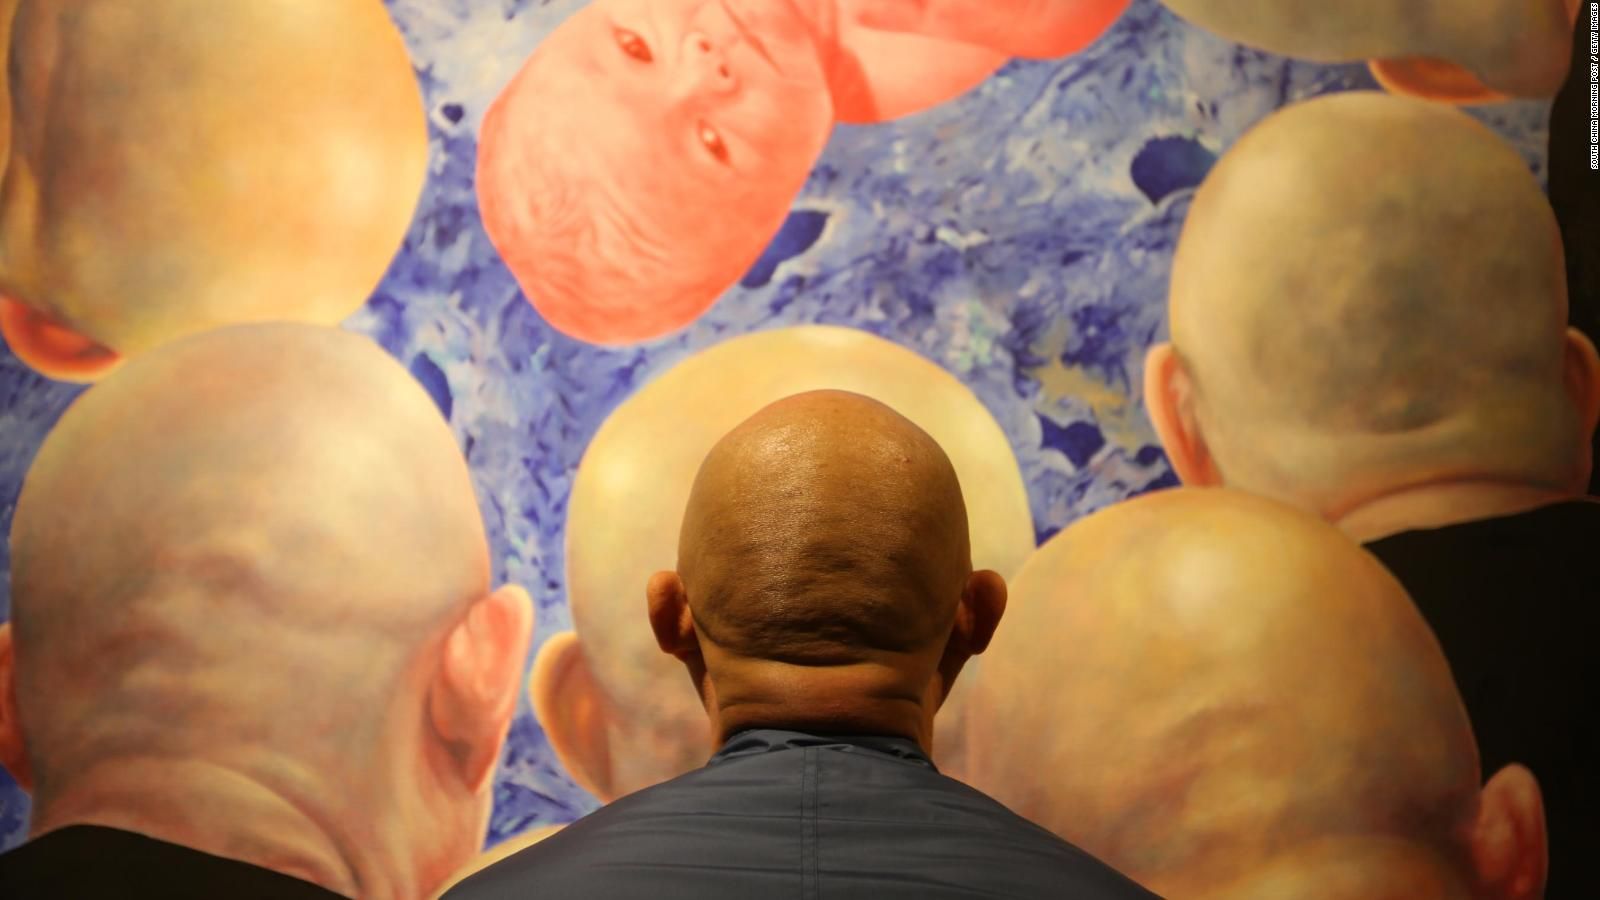 As hair loss rises, bald men in Asia grapple with cultural stigmas